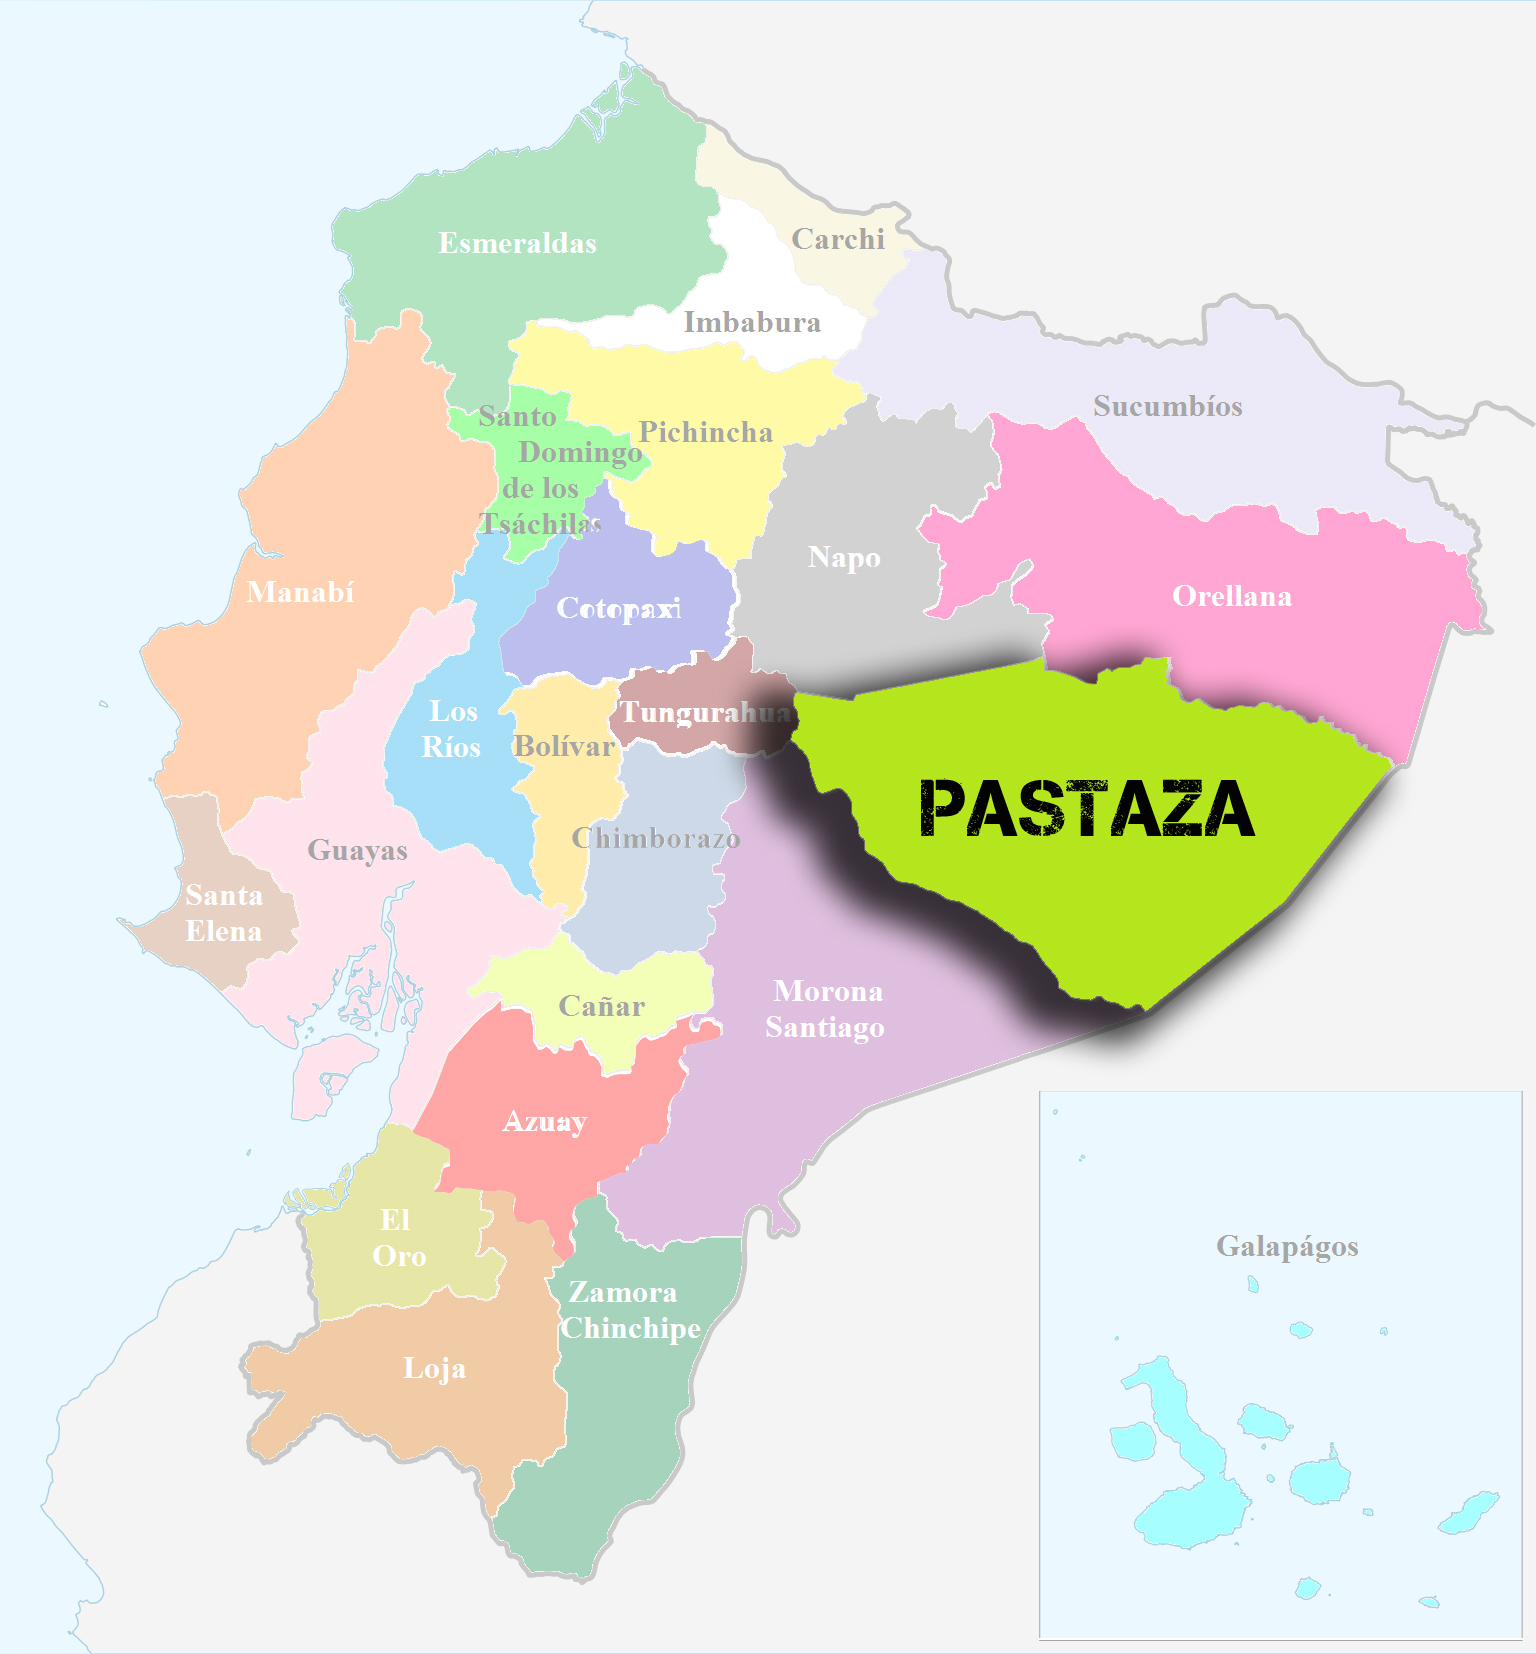 PASTAZA - Hotels of Ecuador